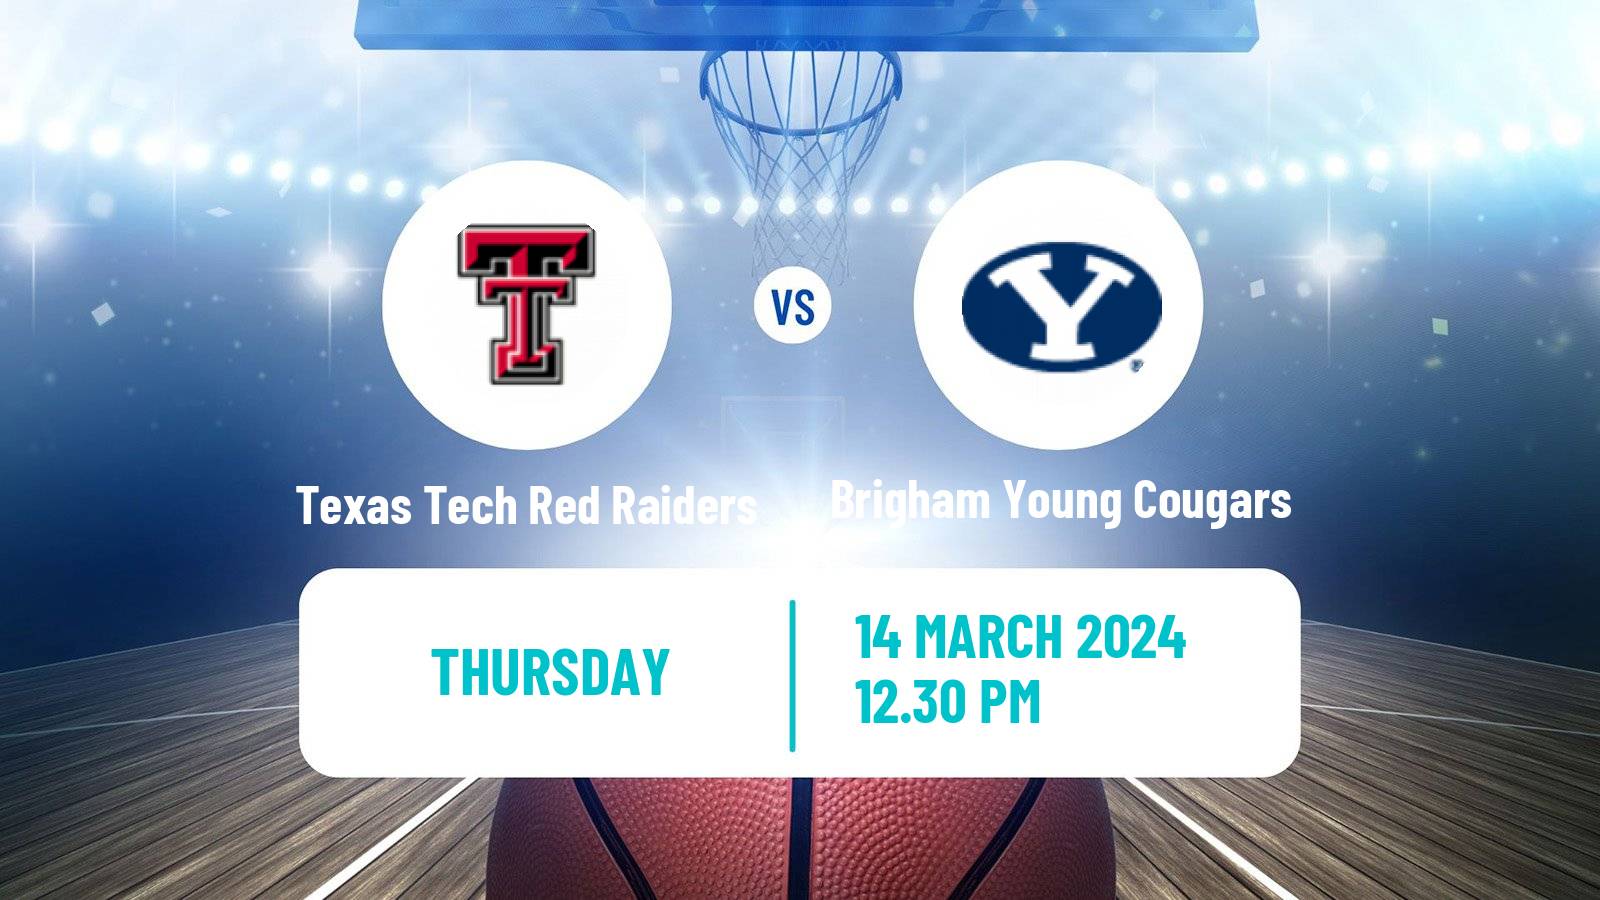 Basketball NCAA College Basketball Texas Tech Red Raiders - Brigham Young Cougars